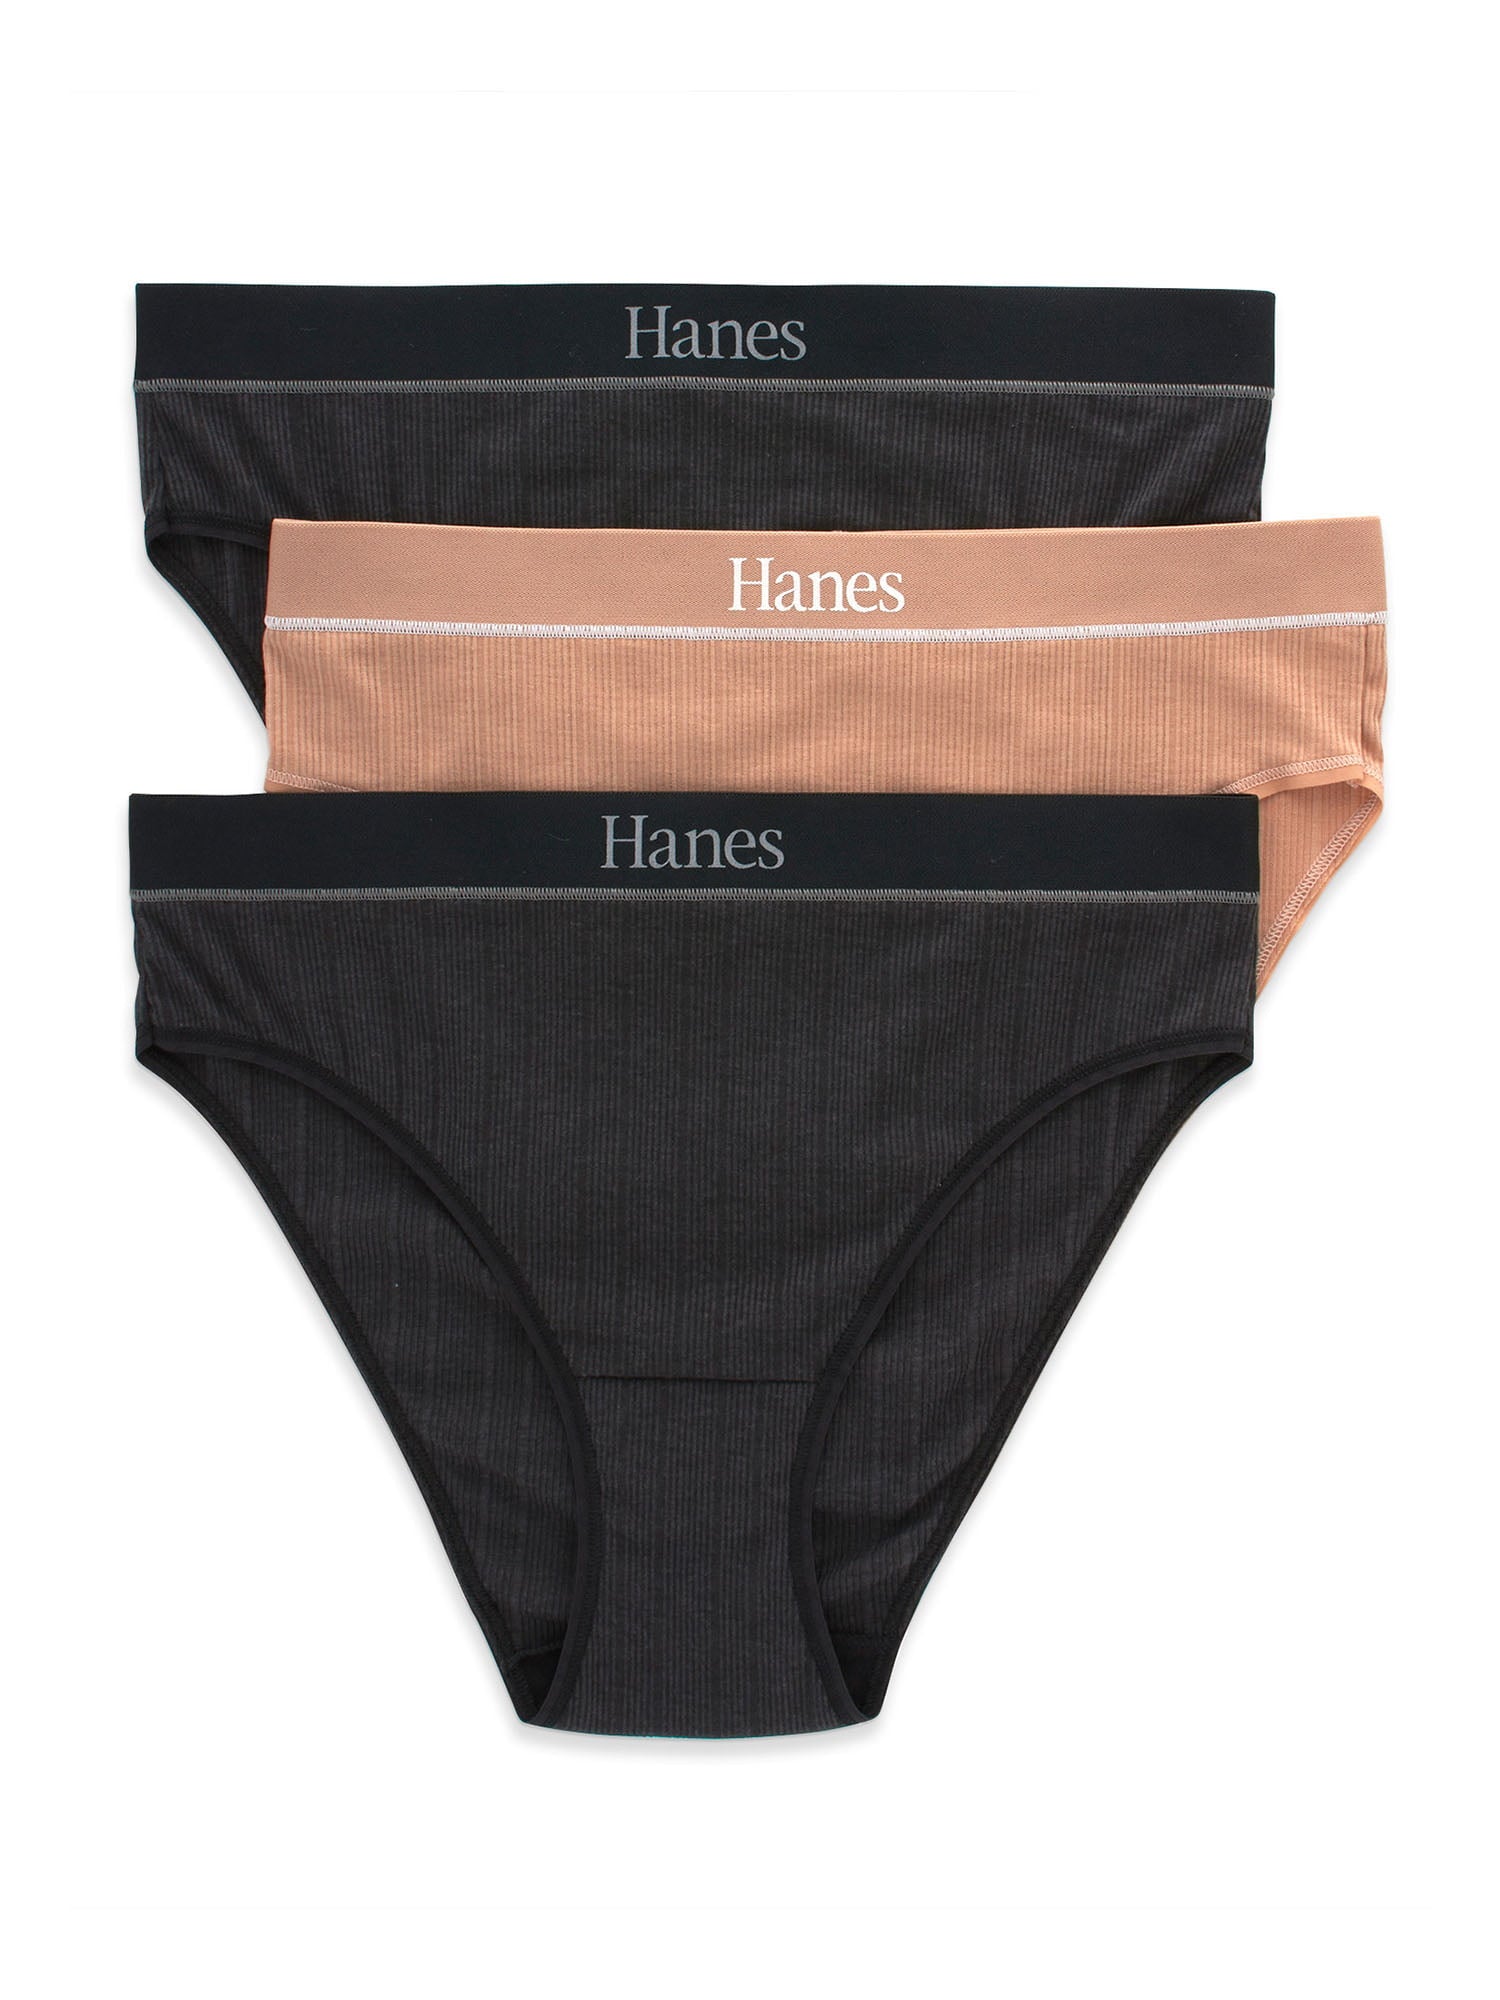 Hanes Originals Women's Thong Underwear, Breathable Cotton Stretch, 6-Pack  